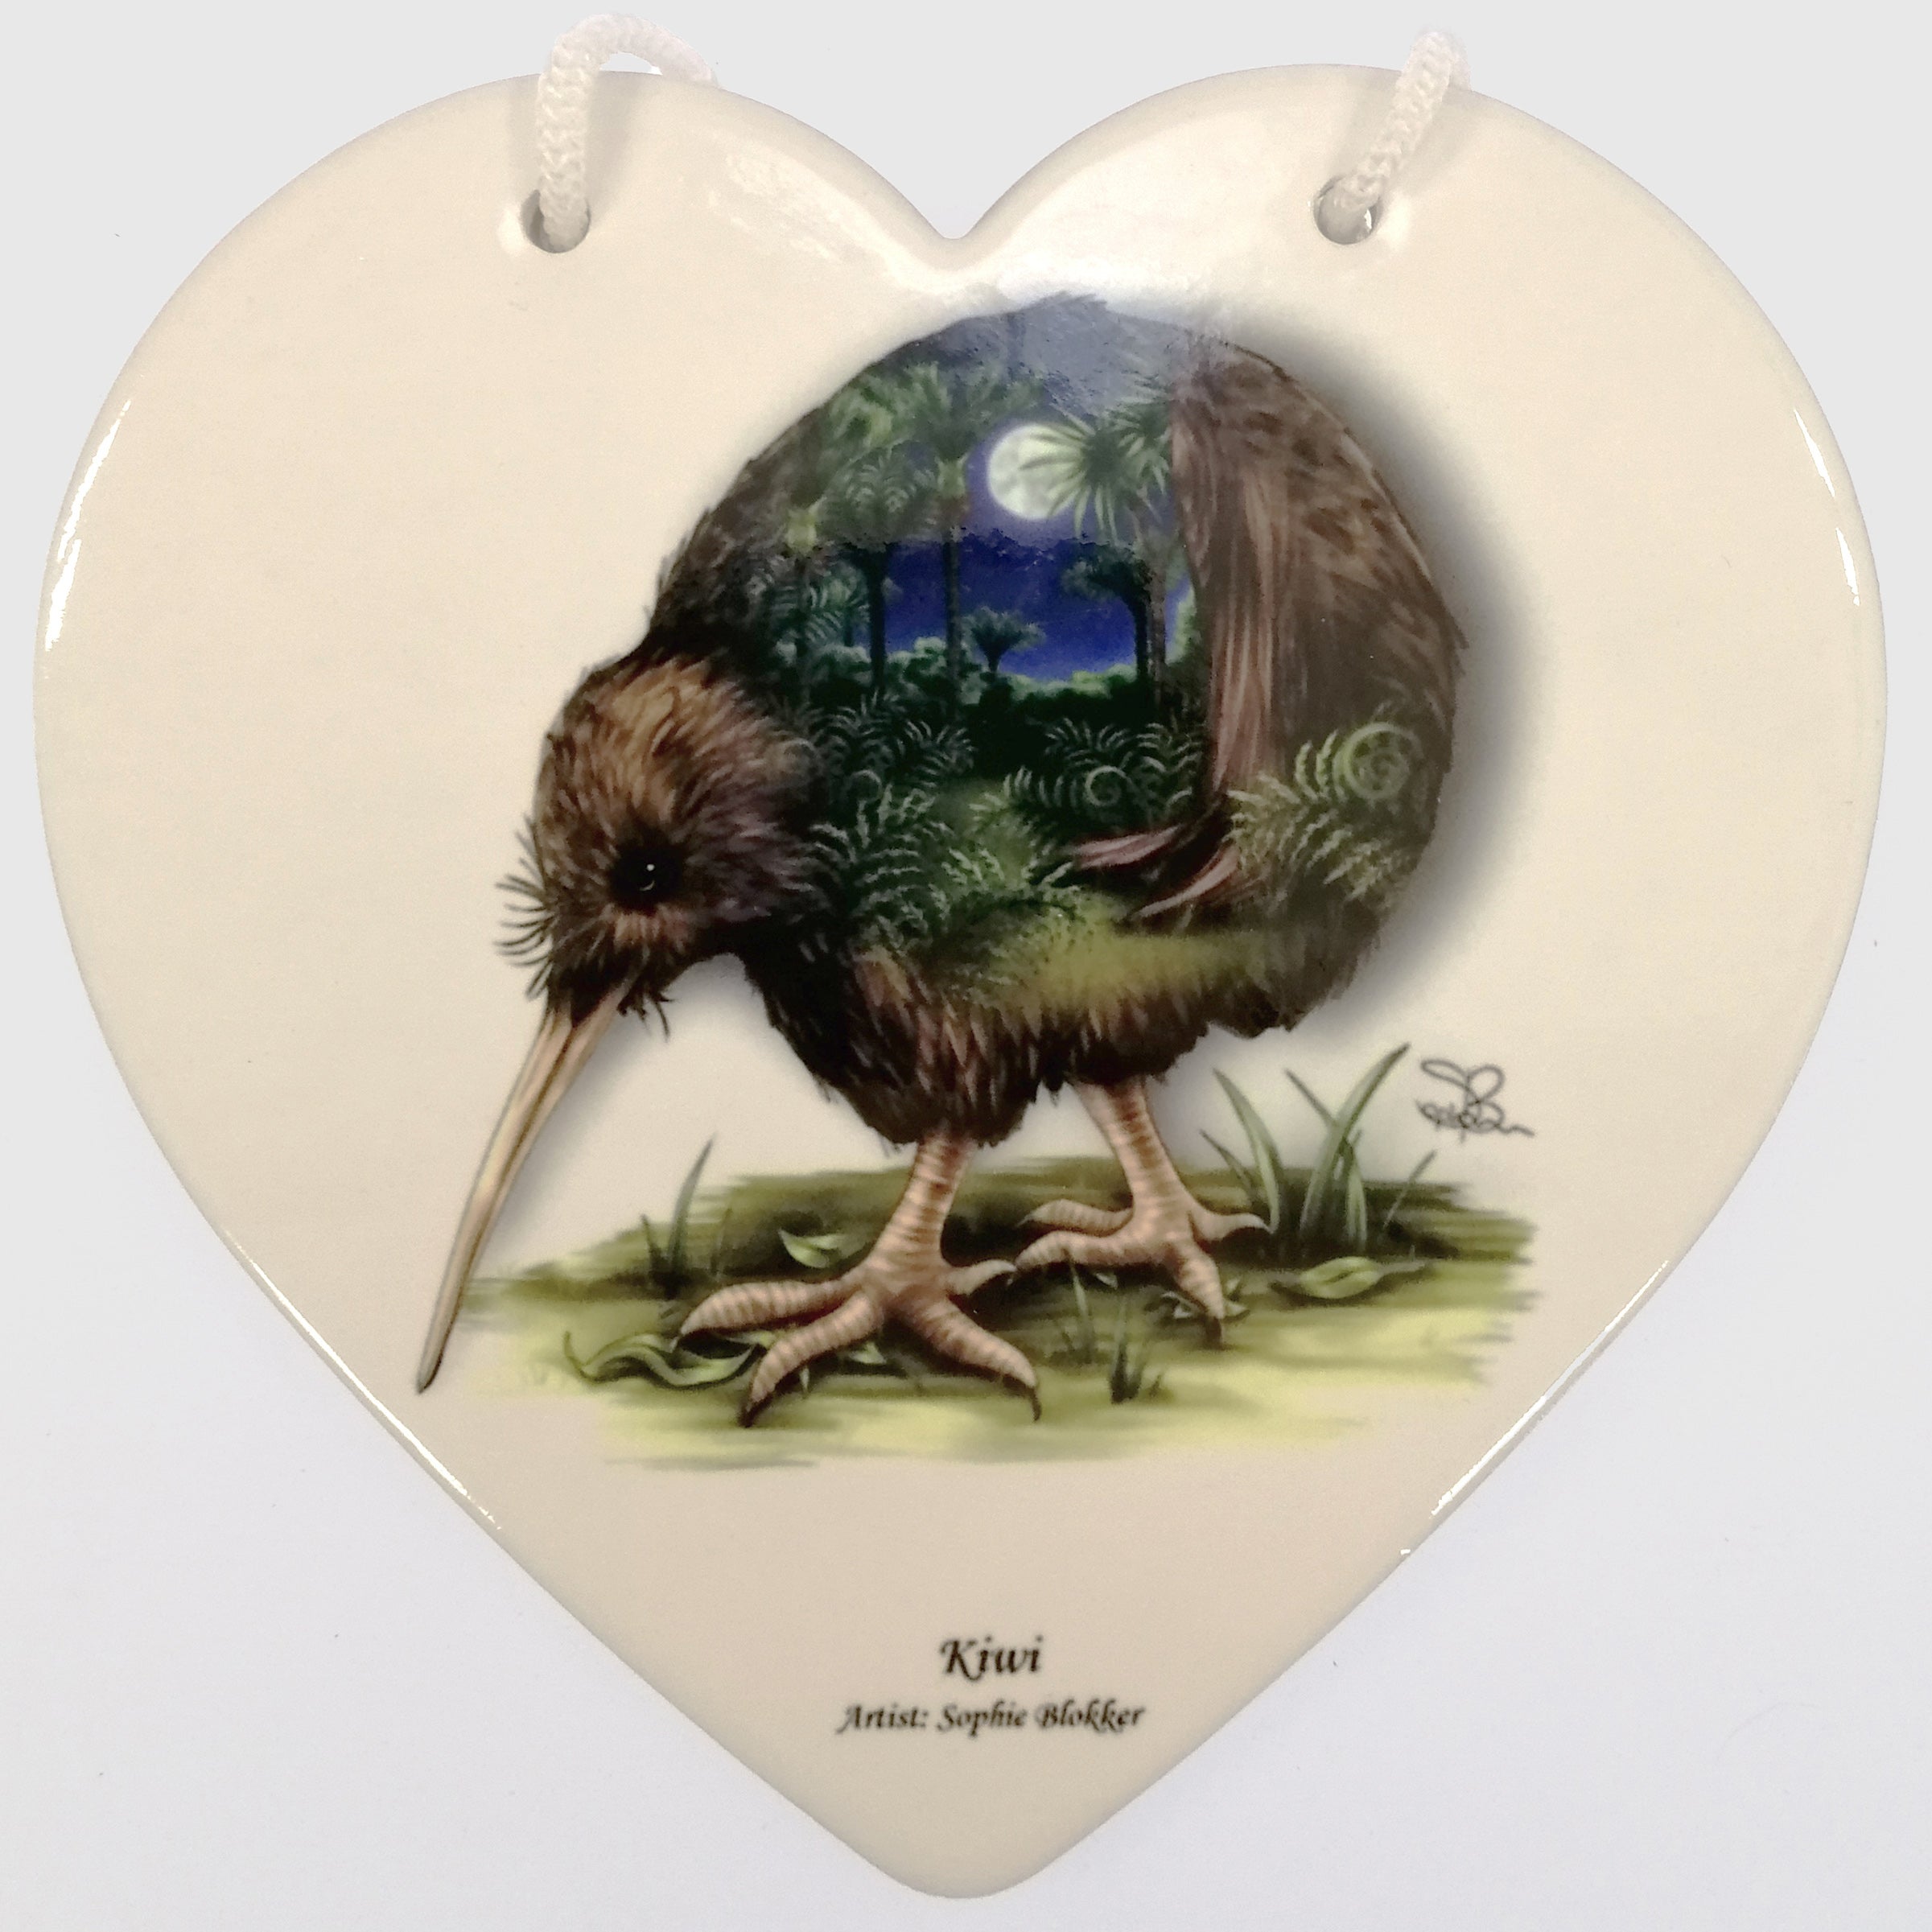 Sophie Blokker - Kiwi Ceramic Heart Wall Hanging